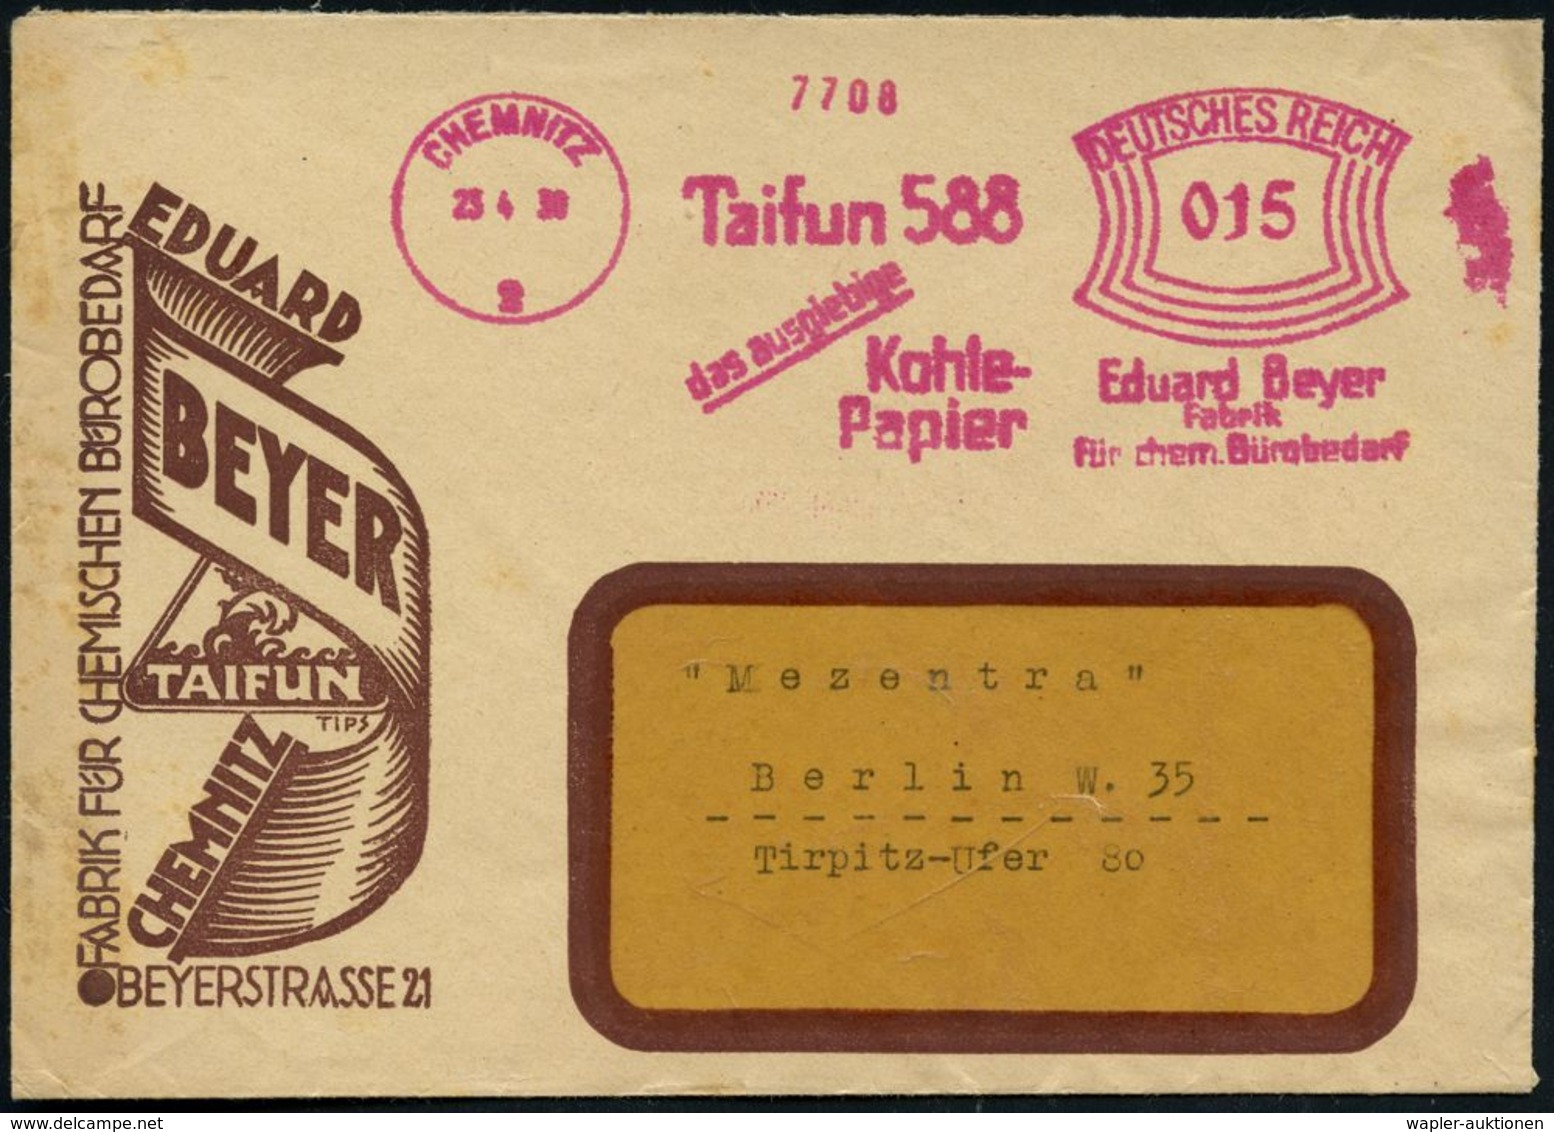 CHEMNITZ/ 2/ Taifun 588/ Das Ausgiebige/ Kohle-/ Papier/ Eduard Beyer.. 1930 (23.4.) Rotviol. AFS Auf Reklame-Bf.: EDUAR - Zonder Classificatie